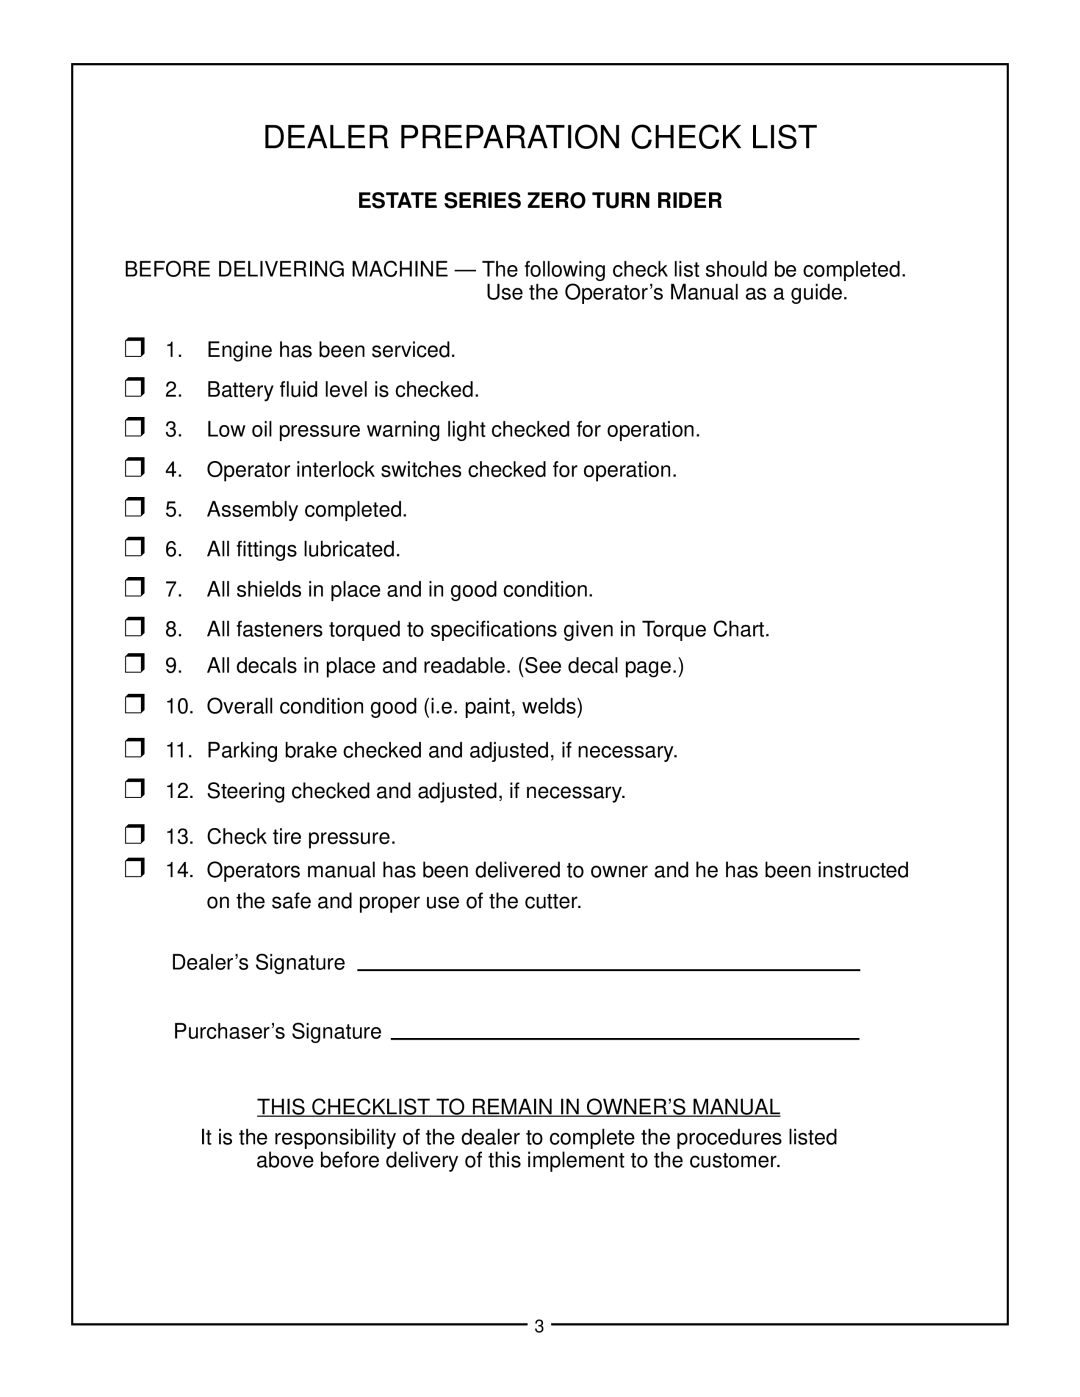 Bush Hog manual Dealer Preparation Check List, Estate Series Zero Turn Rider 